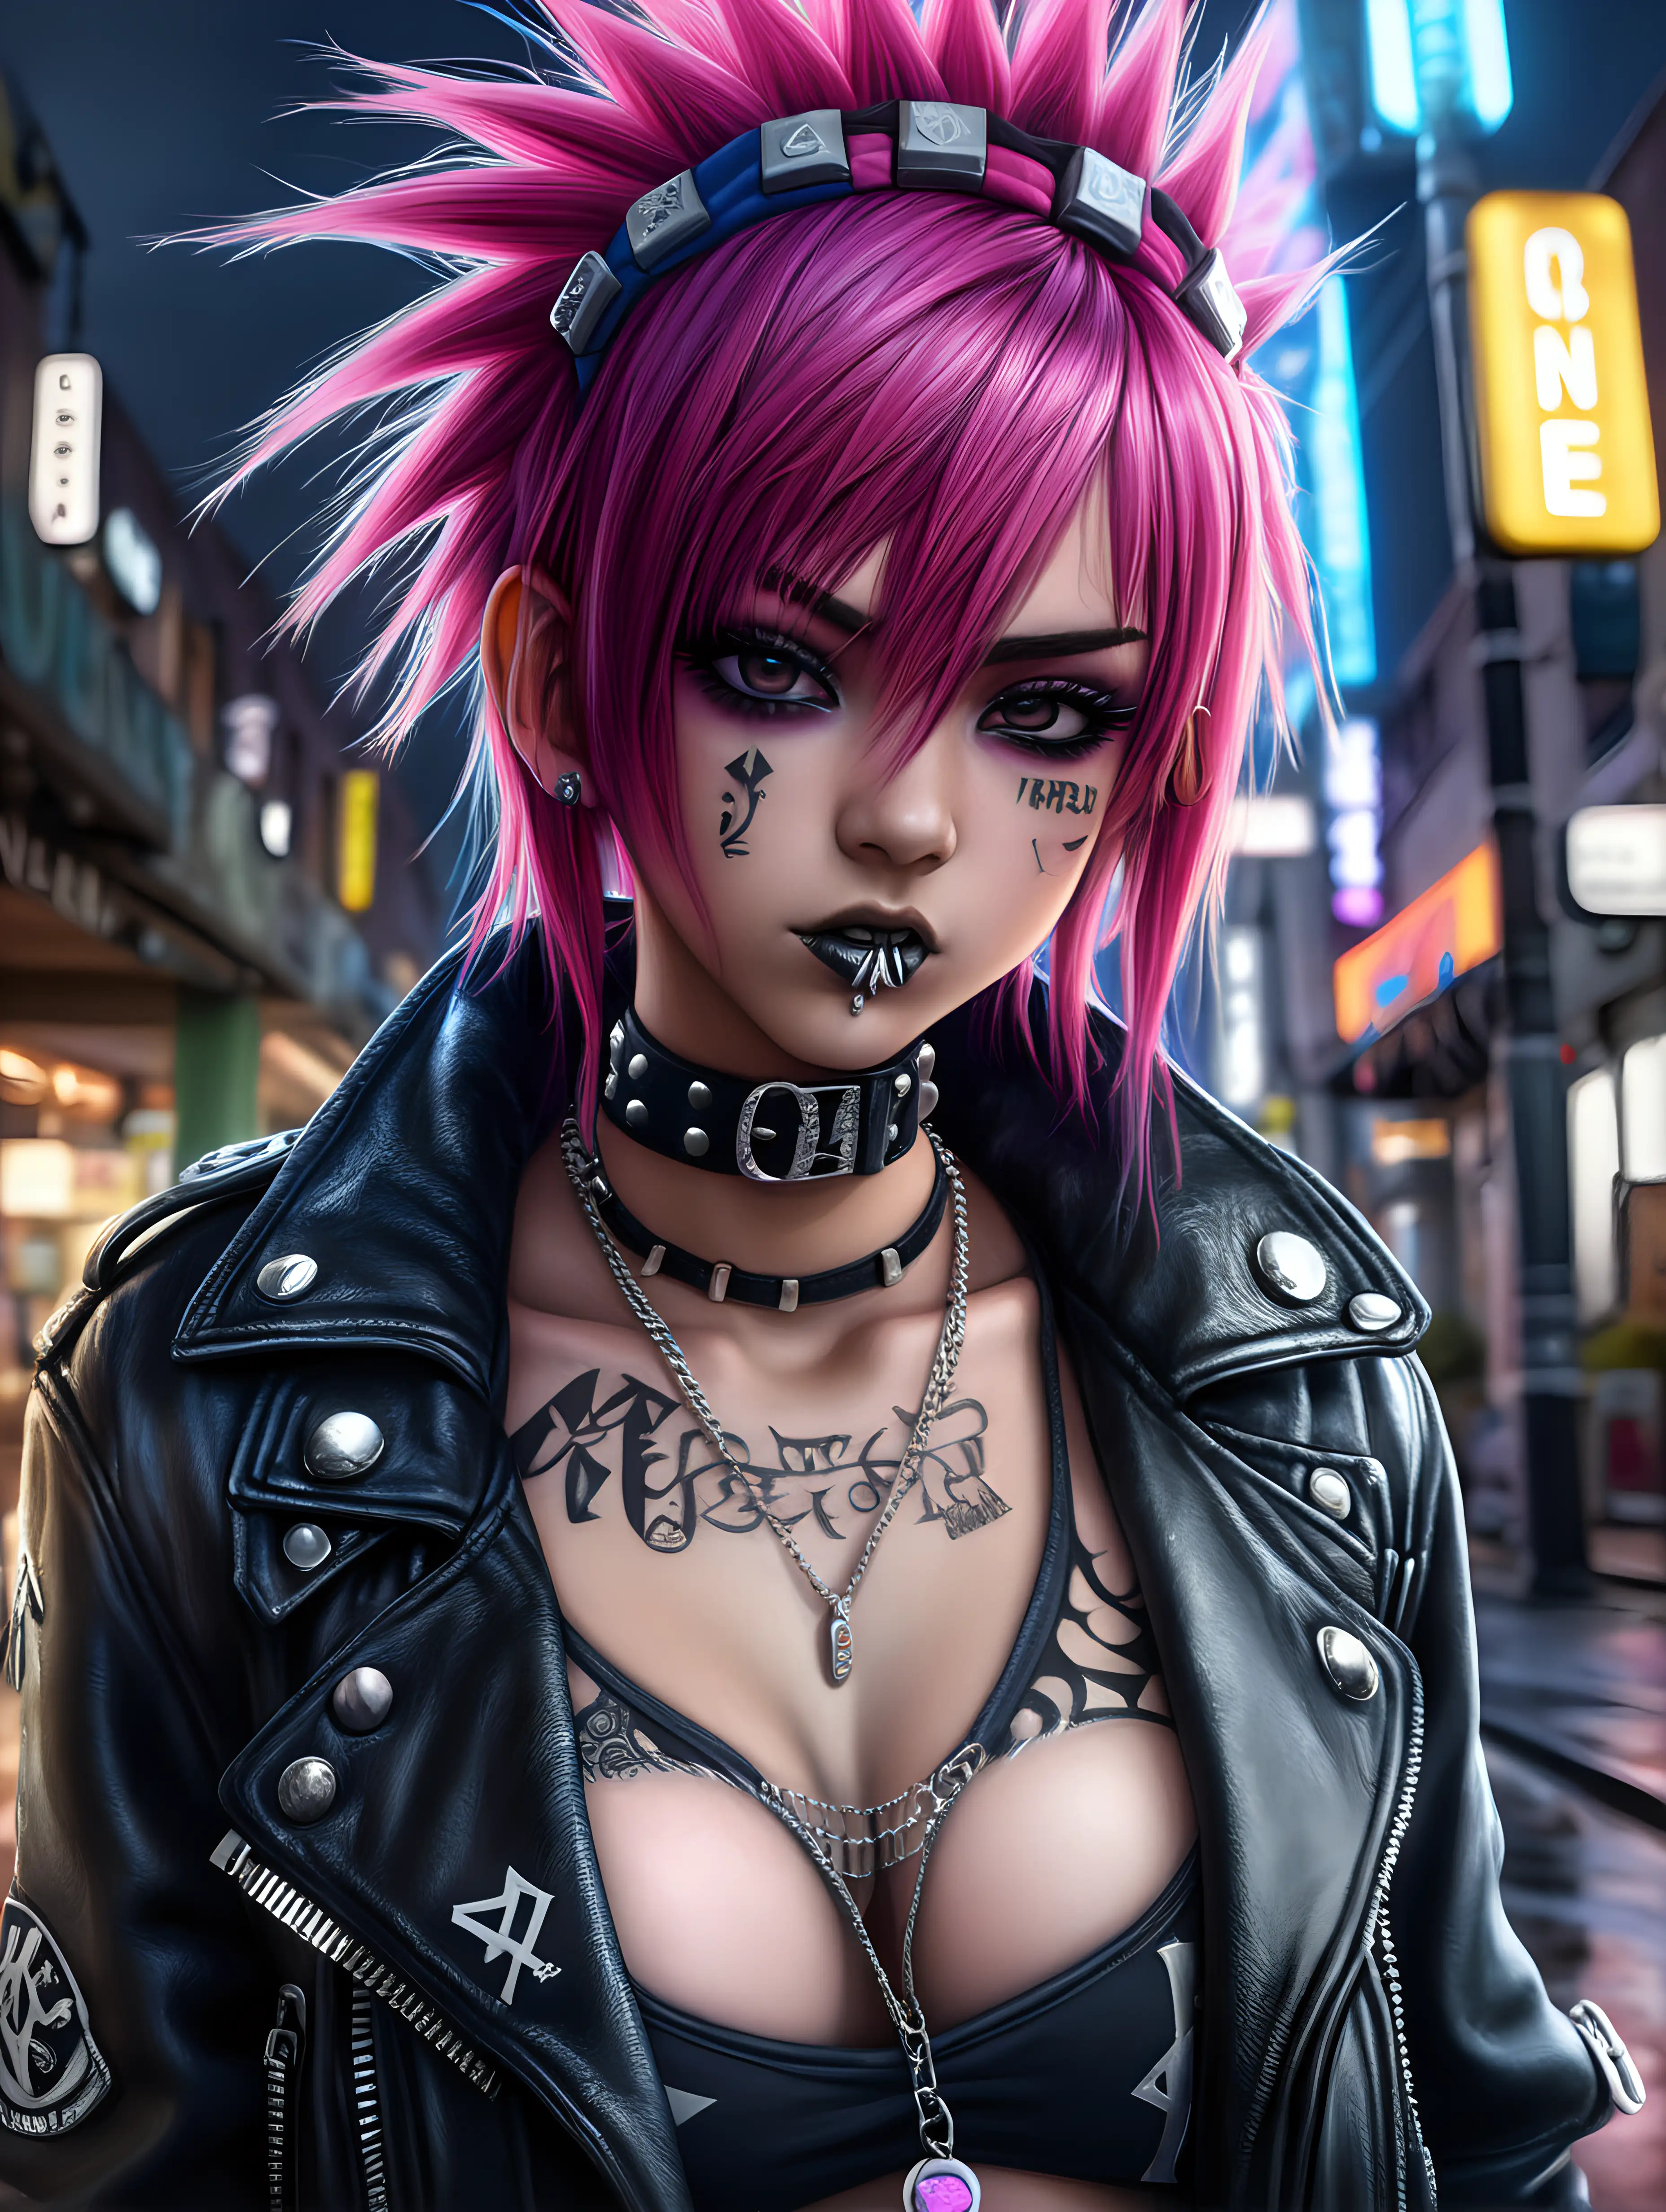 Rebellious Anime Girl in Urban Setting with Punk Fashion